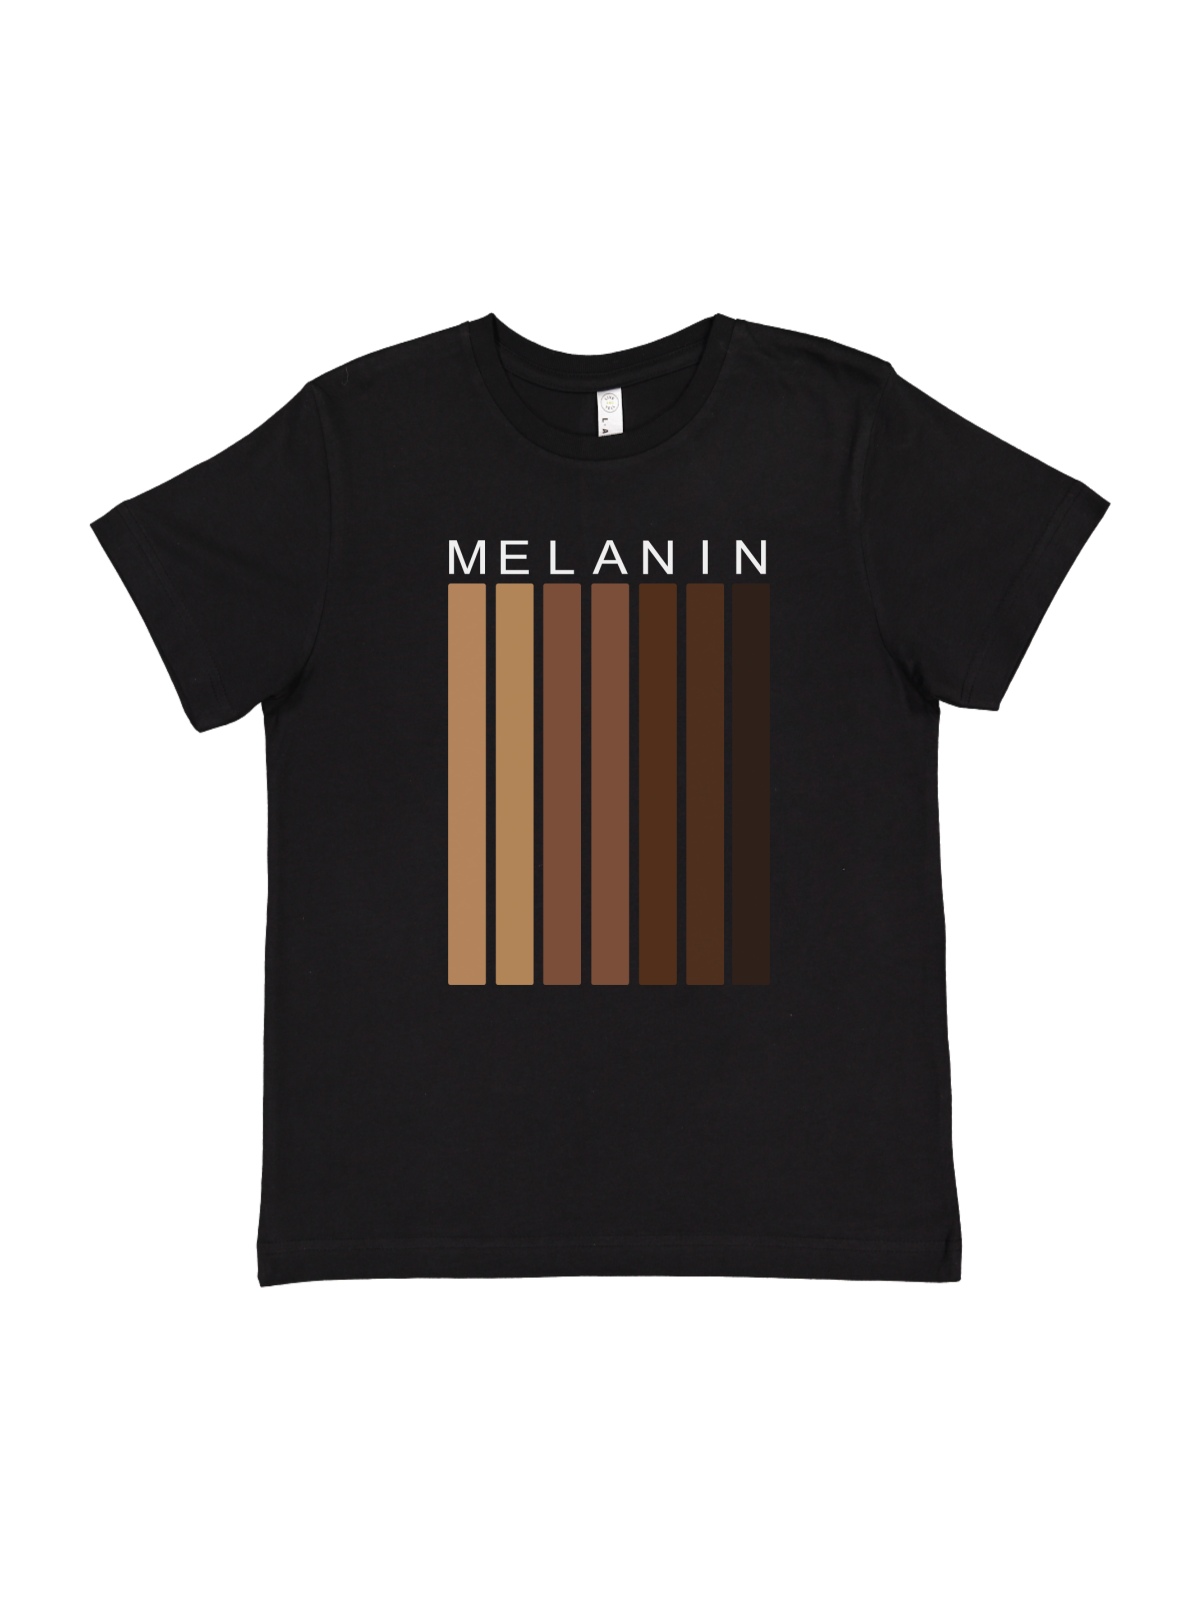 Shades of Melanin Kids Shirt